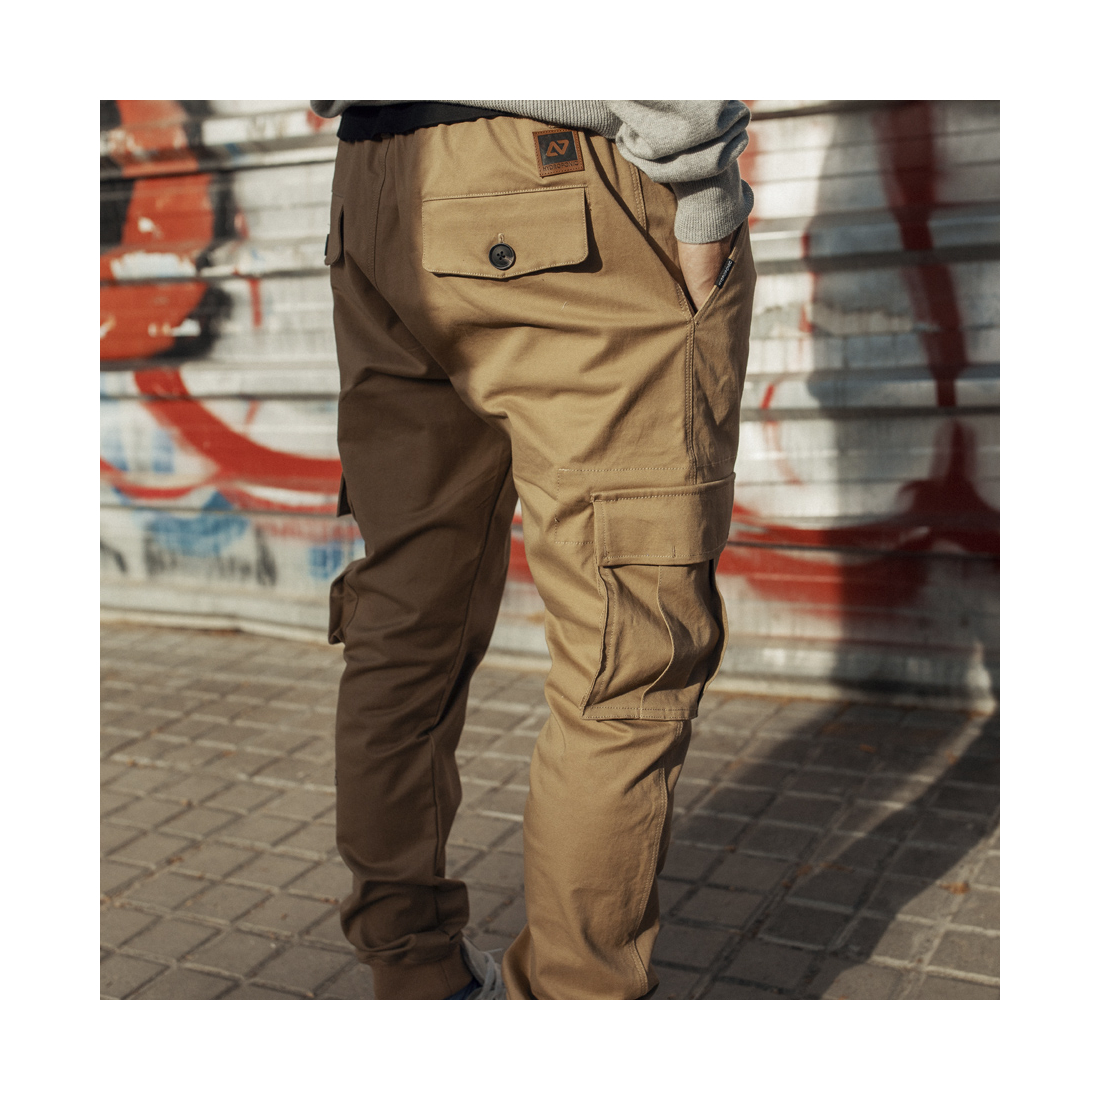 Hombres Pantalones con bolsillo con solapa con cremallera bajo de cintura  con cordón